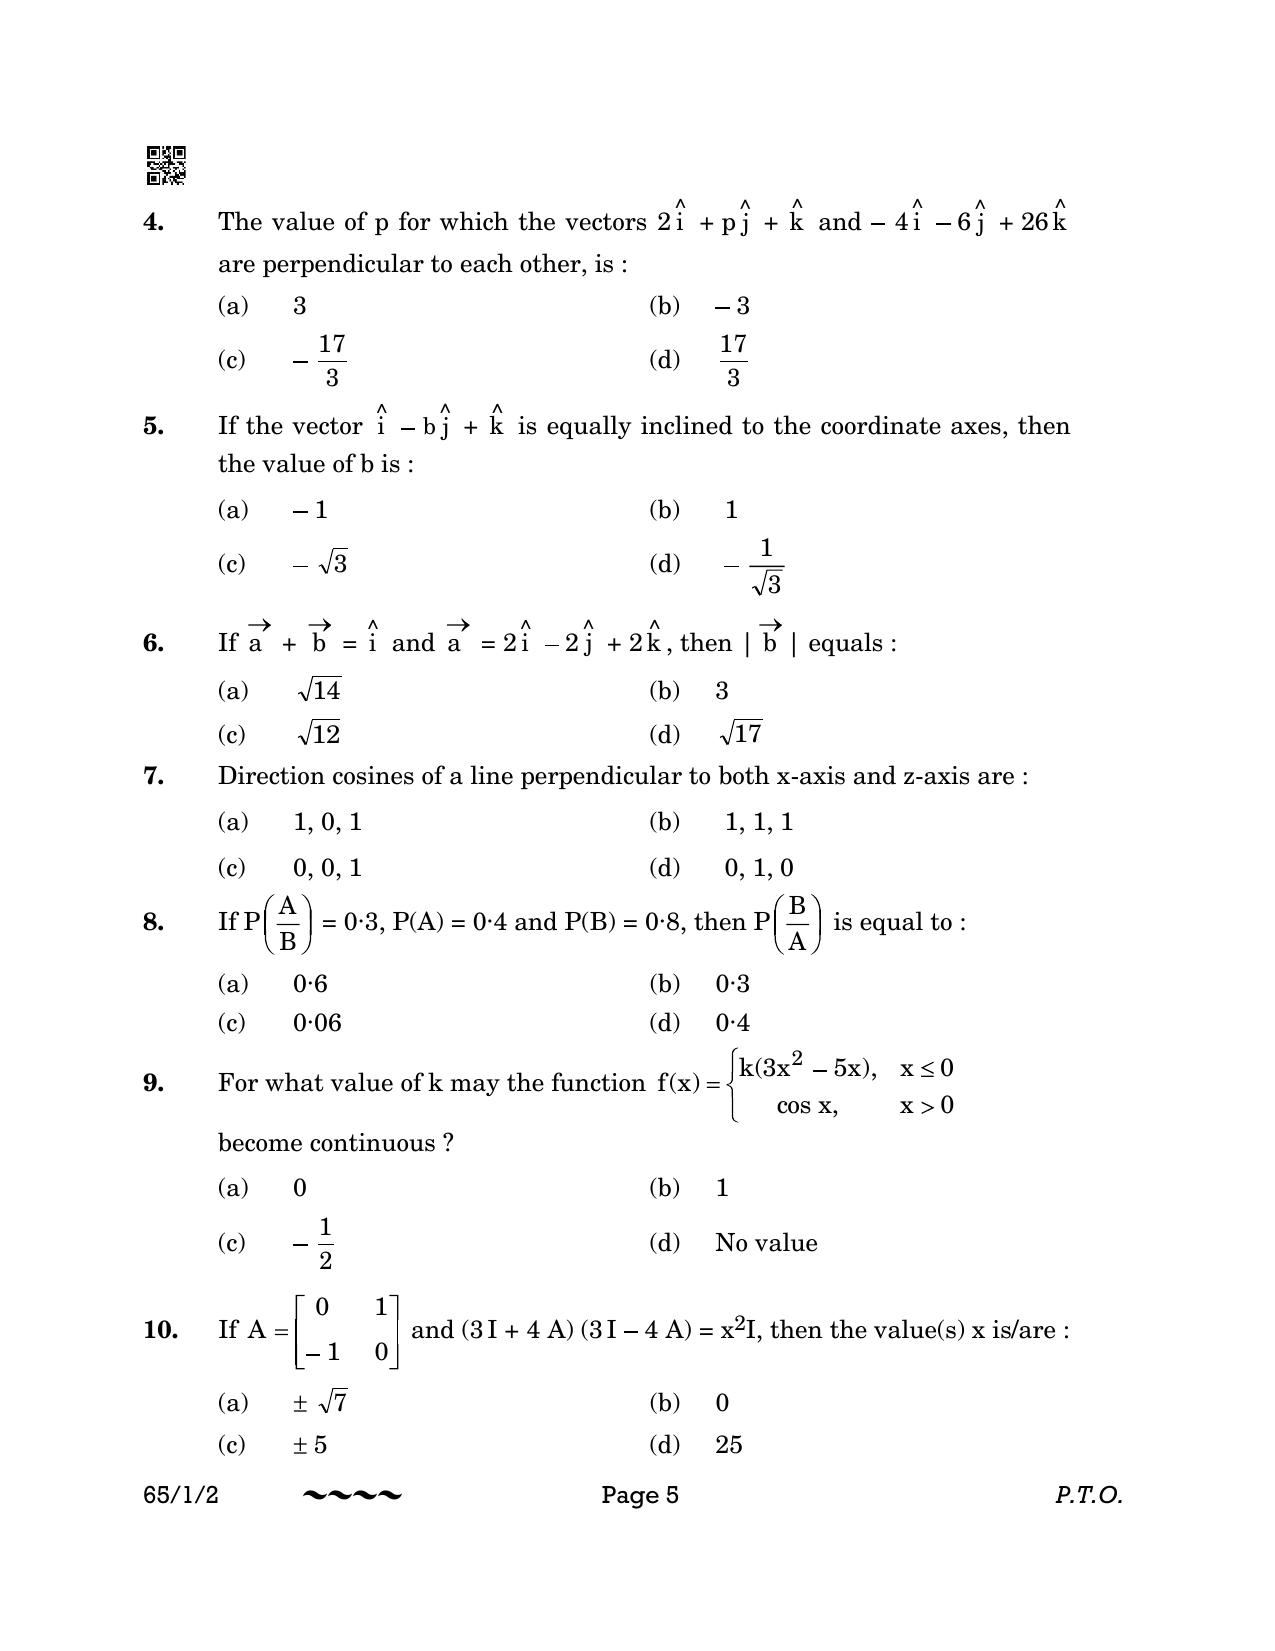 CBSE Class 12 65-1-2 MATHEMATICS 2023 Question Paper - Page 5